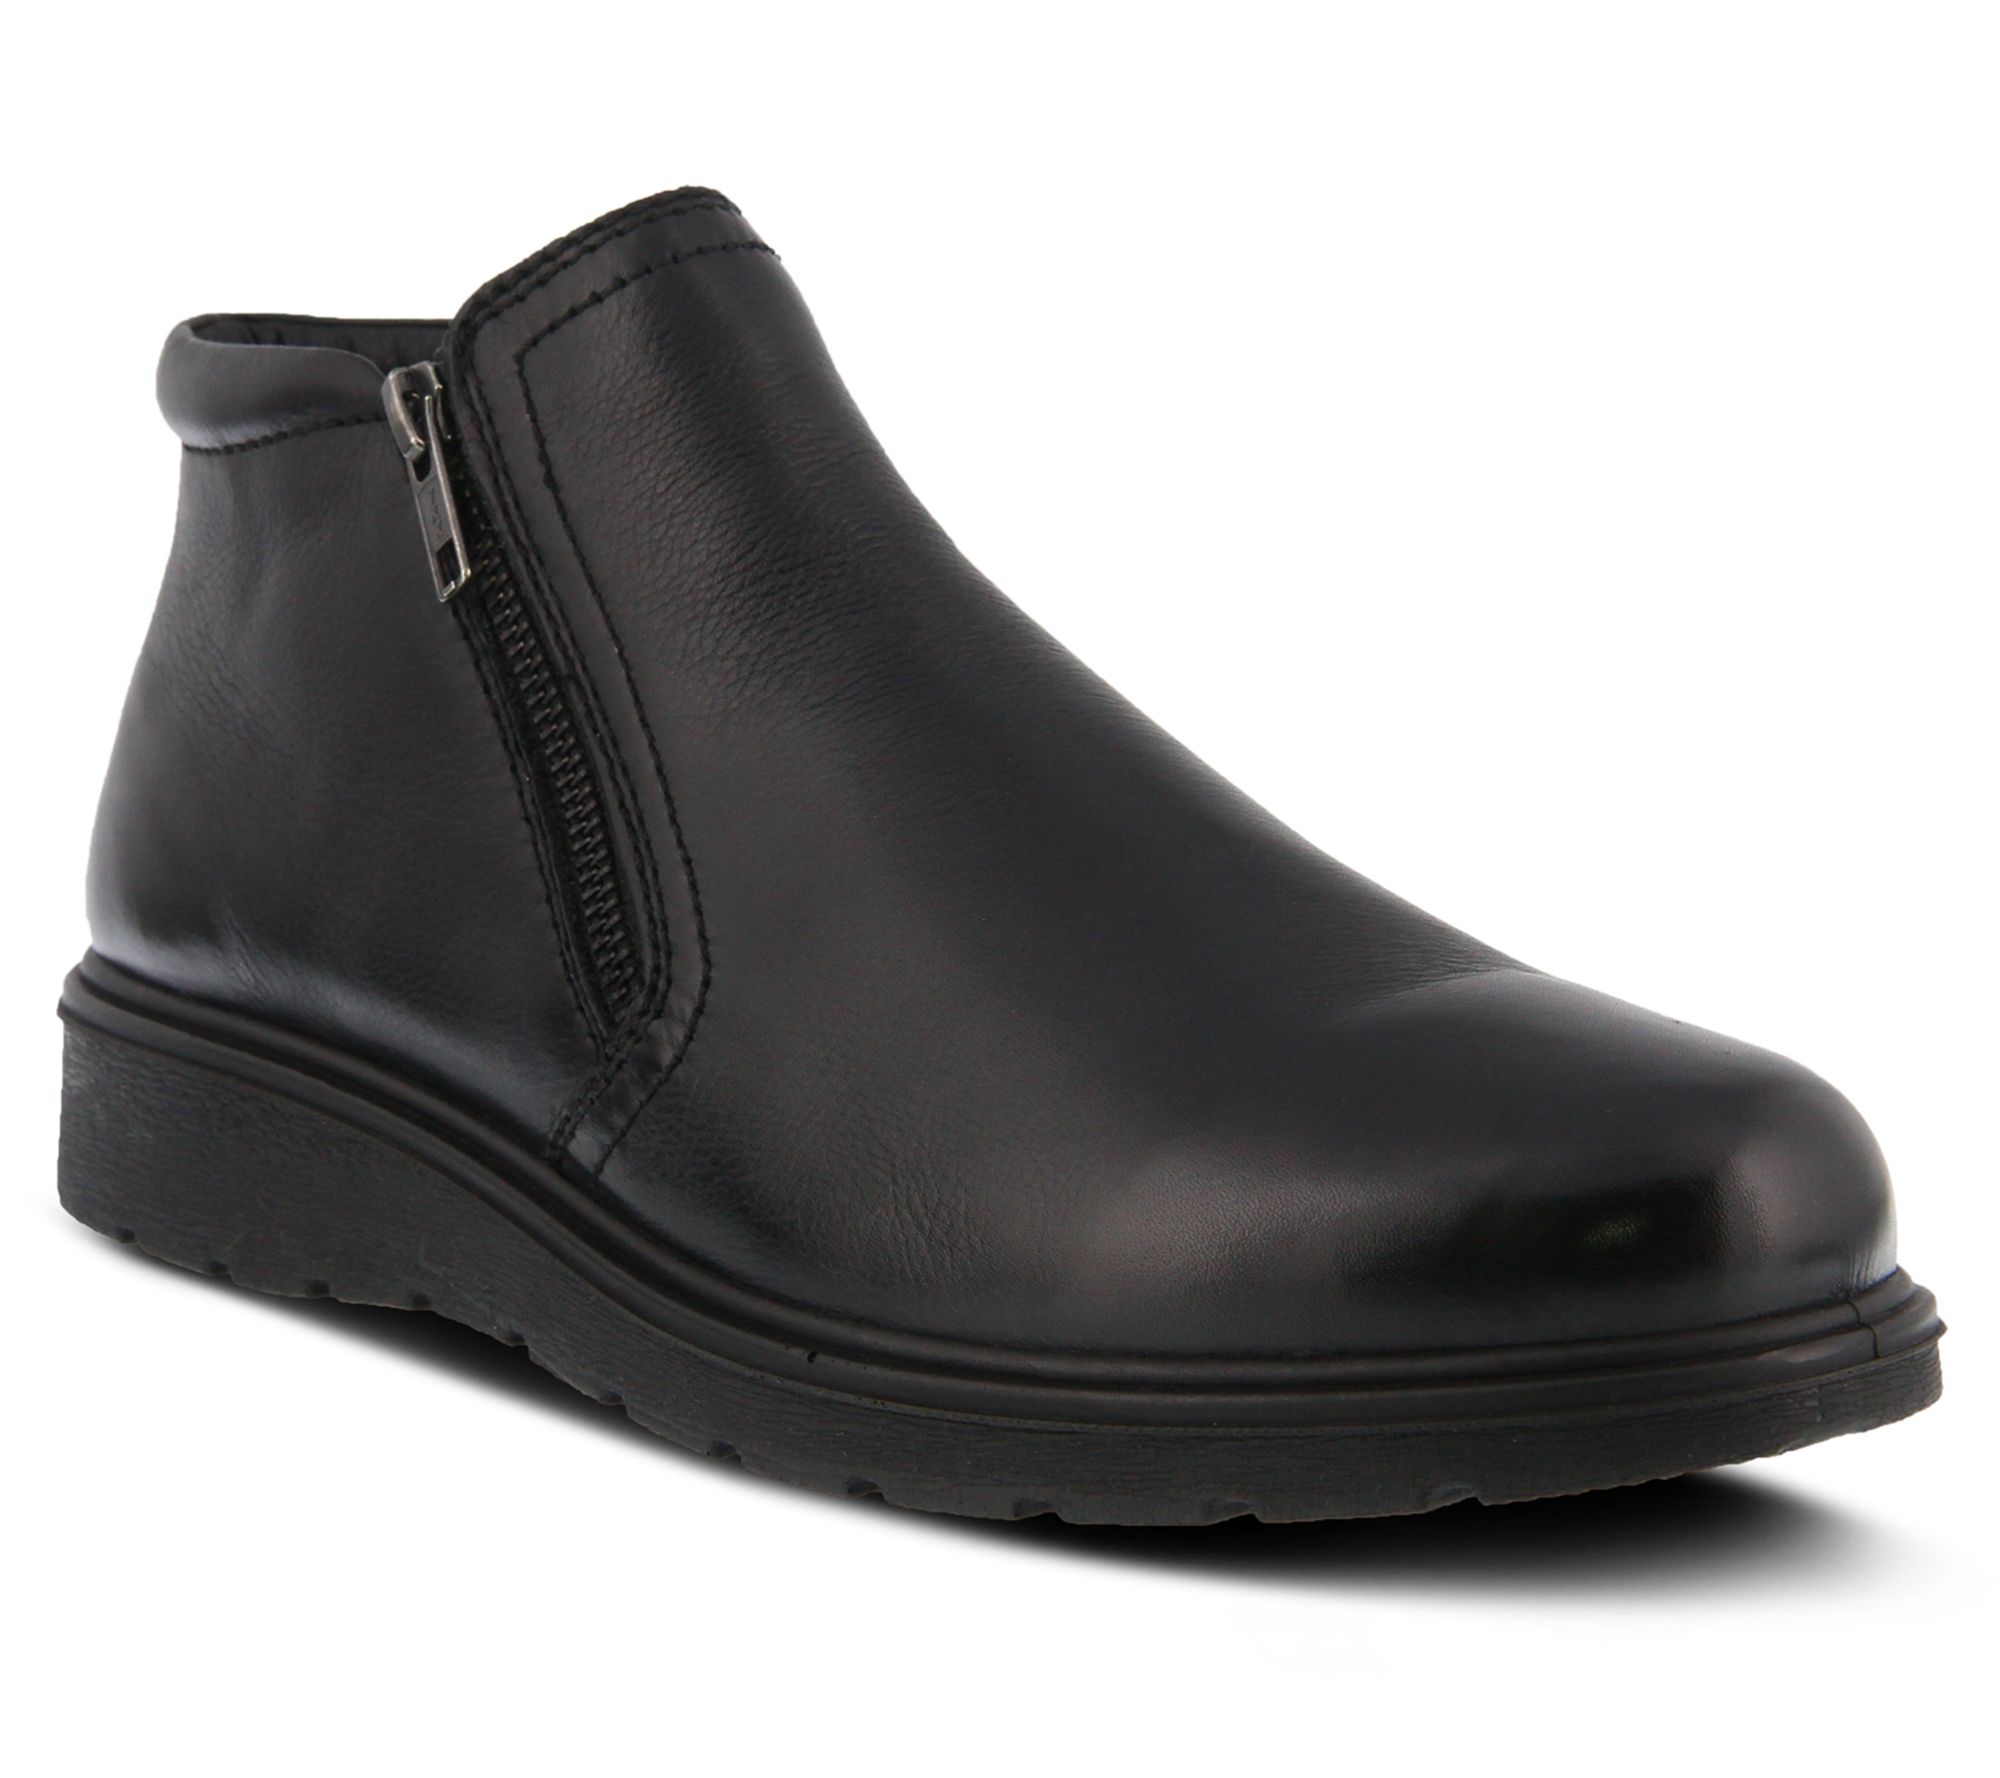 Spring Step Men's Leather Boots - Mason - QVC.com